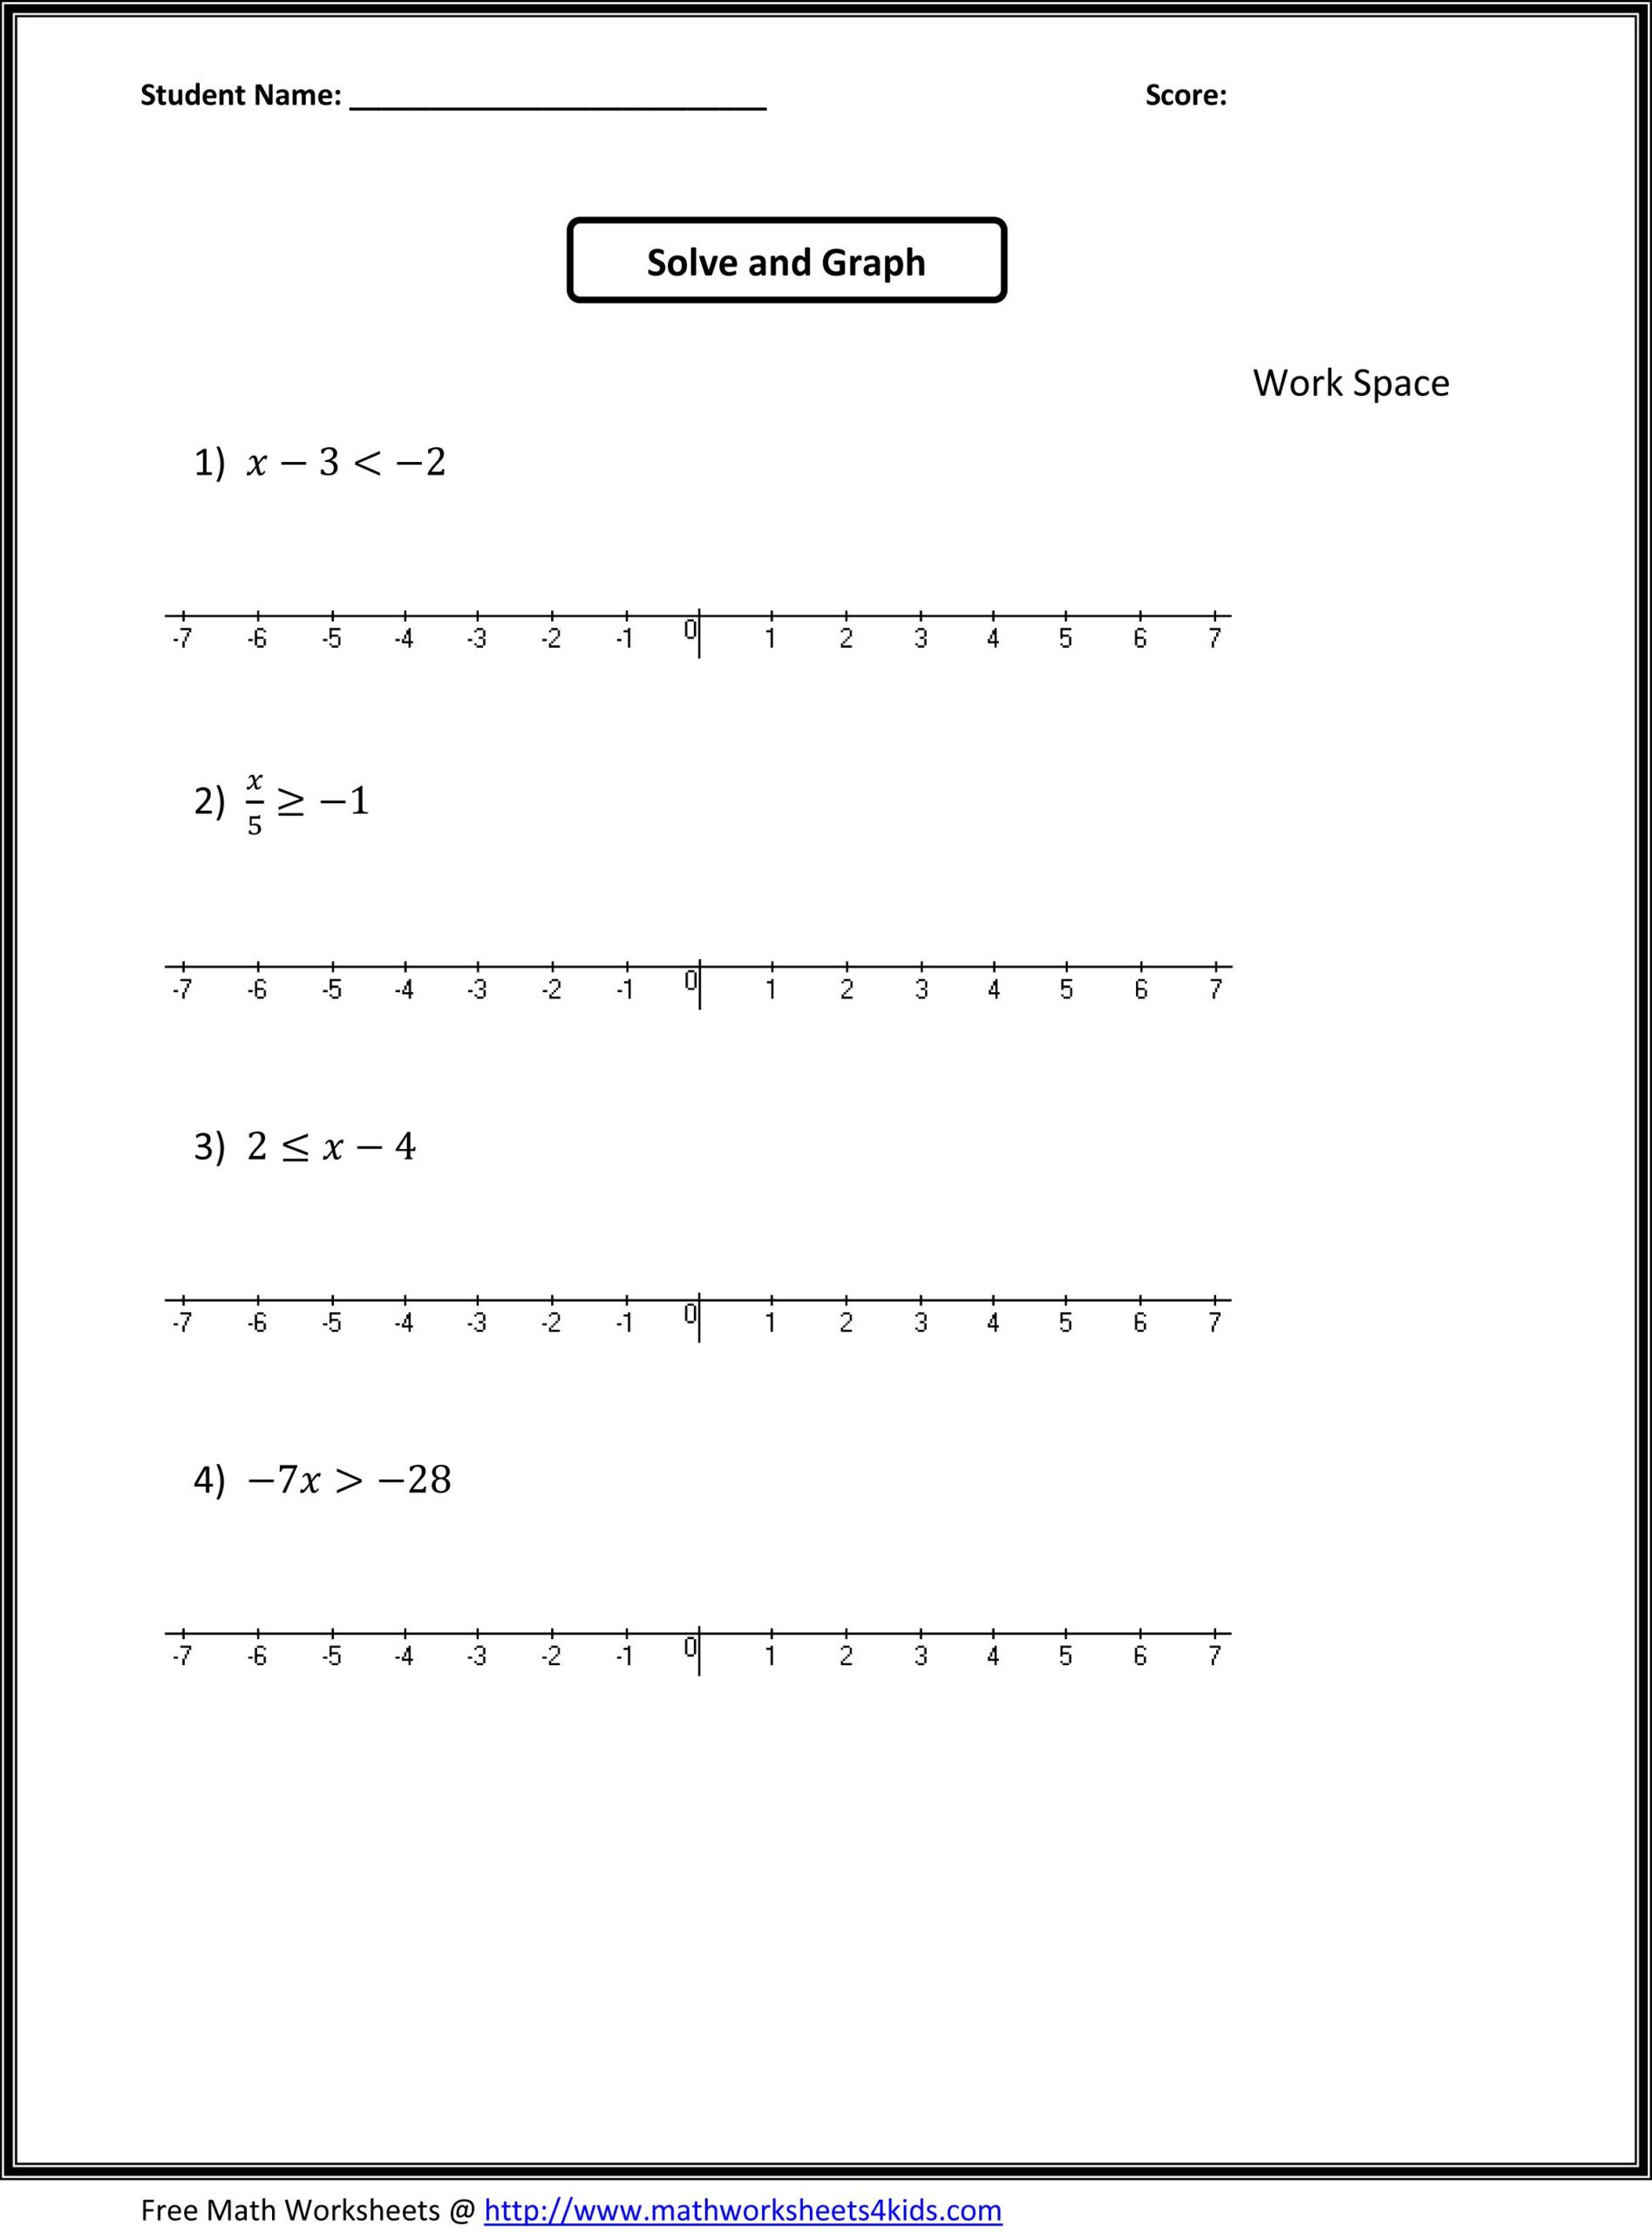  Multiplication Worksheets 7Th Grade PrintableMultiplication